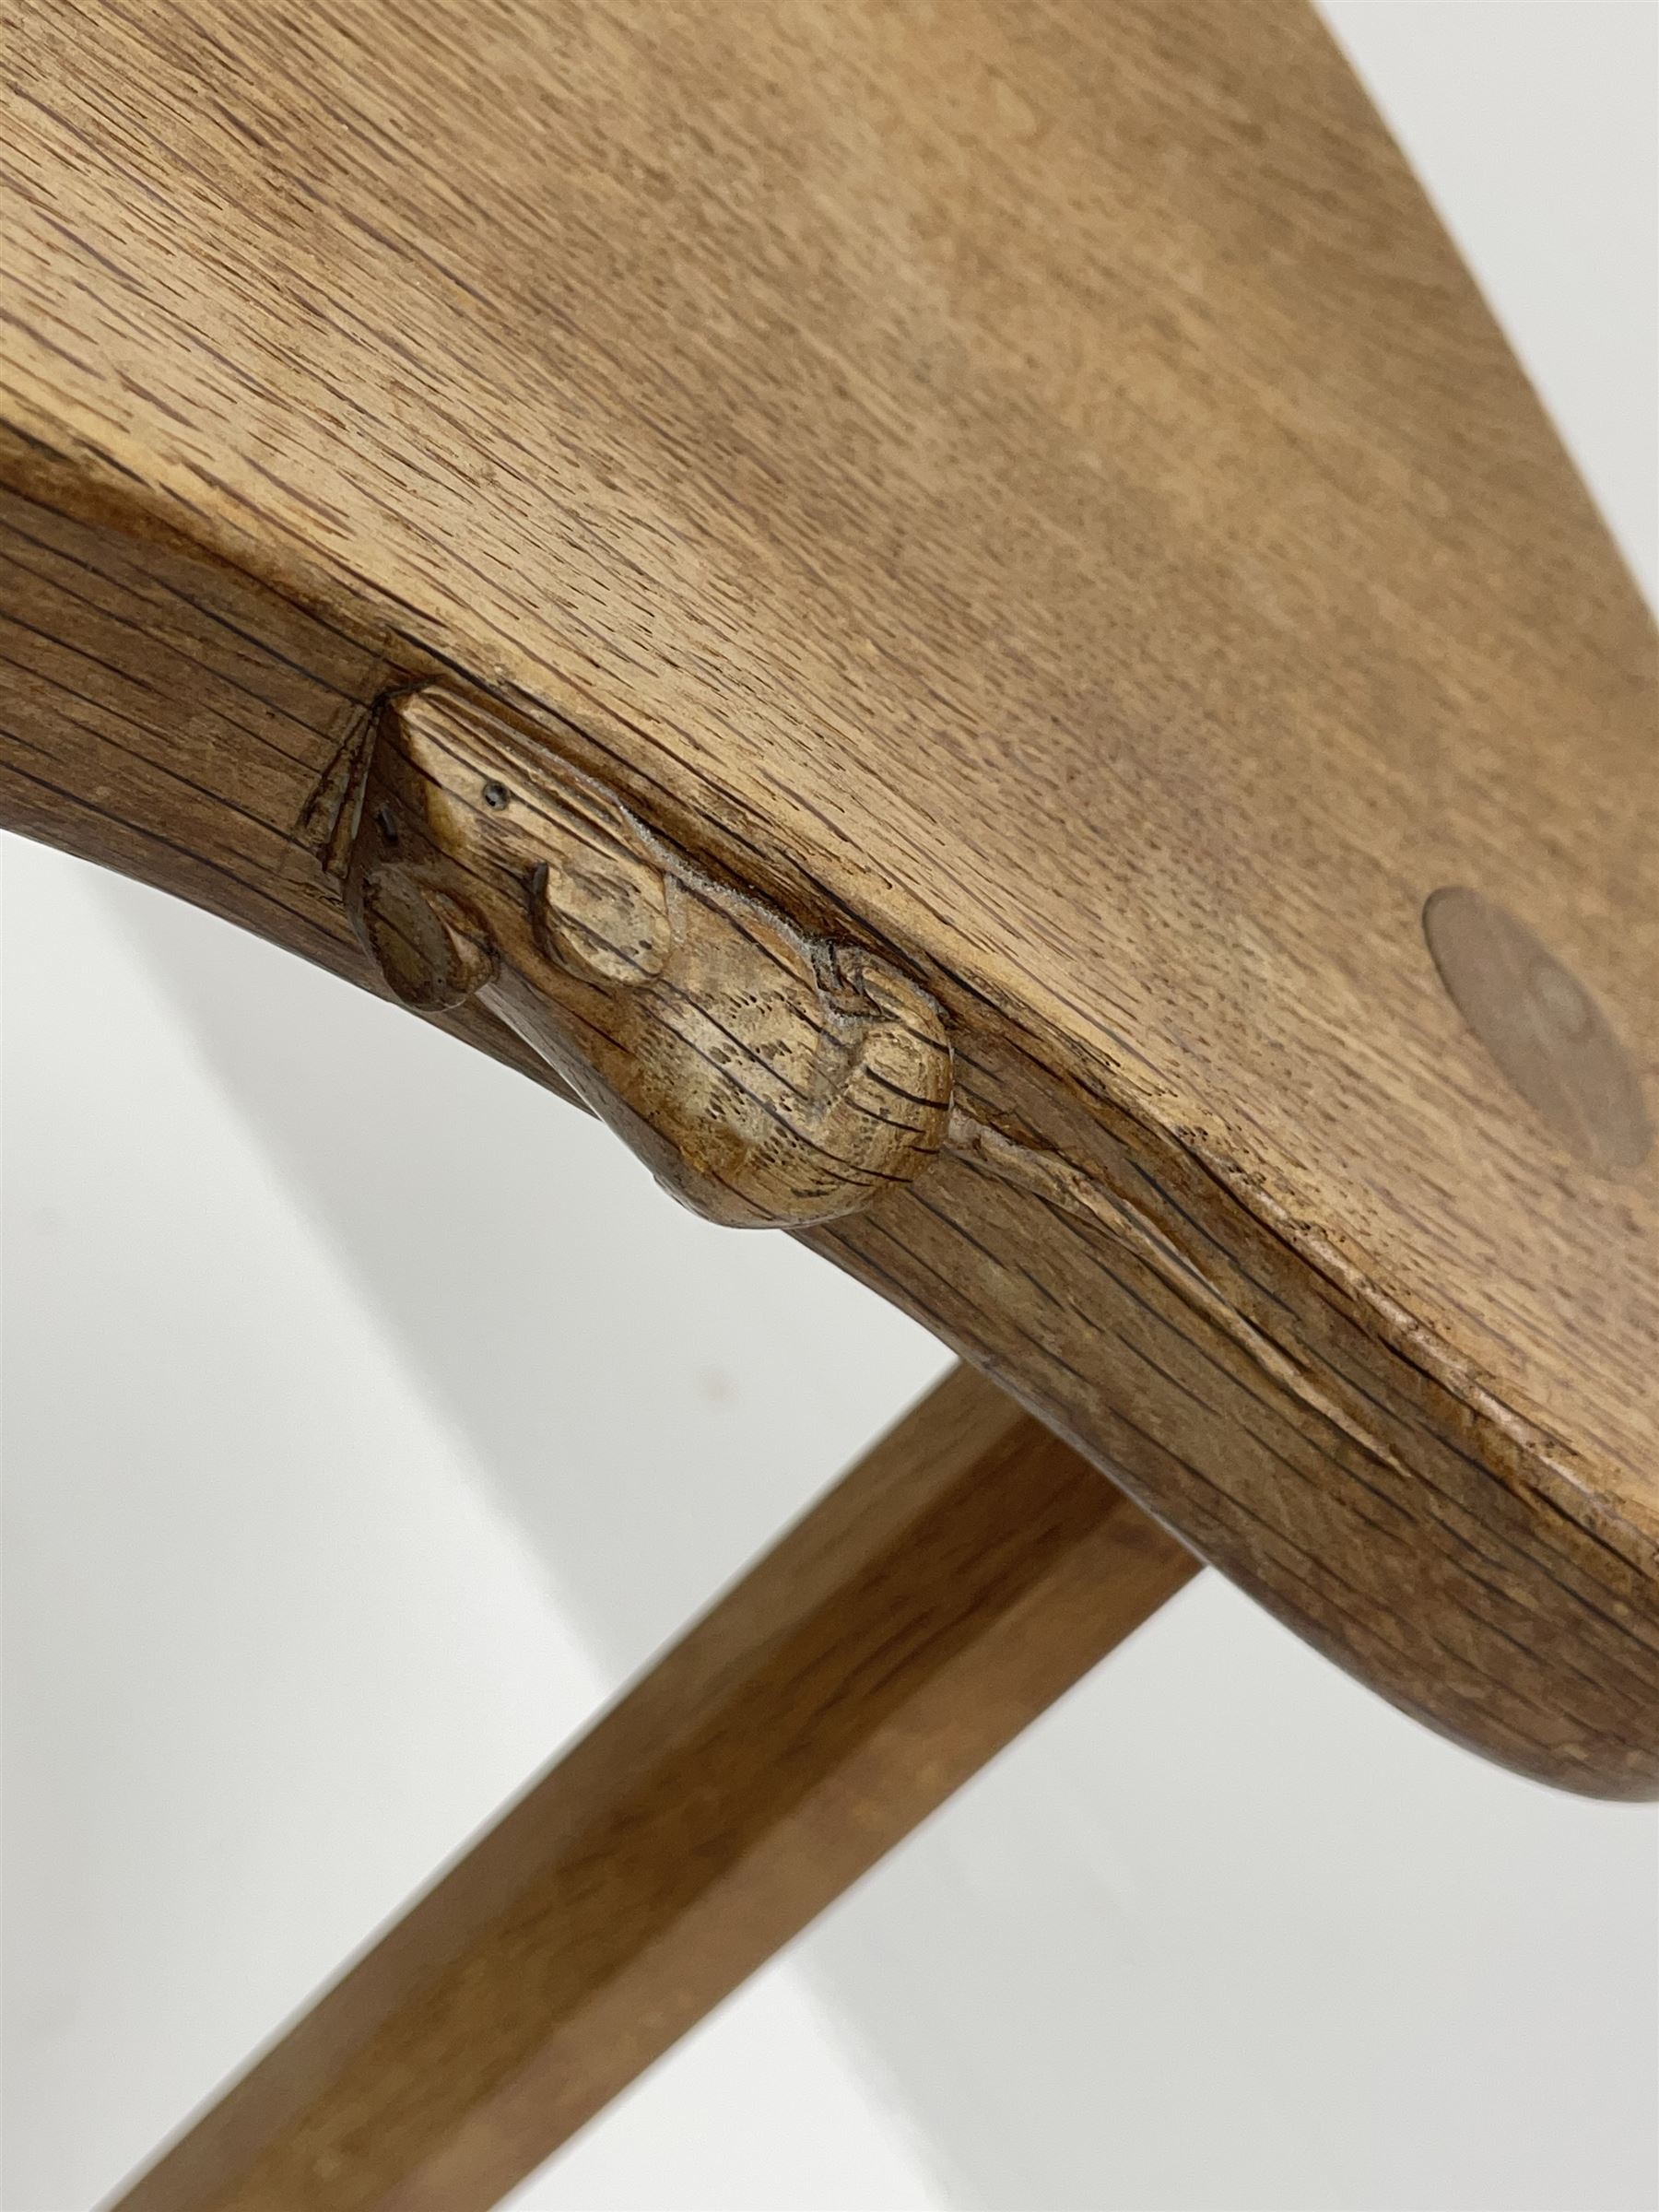 'Mouseman' oak three legged stool with dished kidney shaped seat - Image 2 of 3